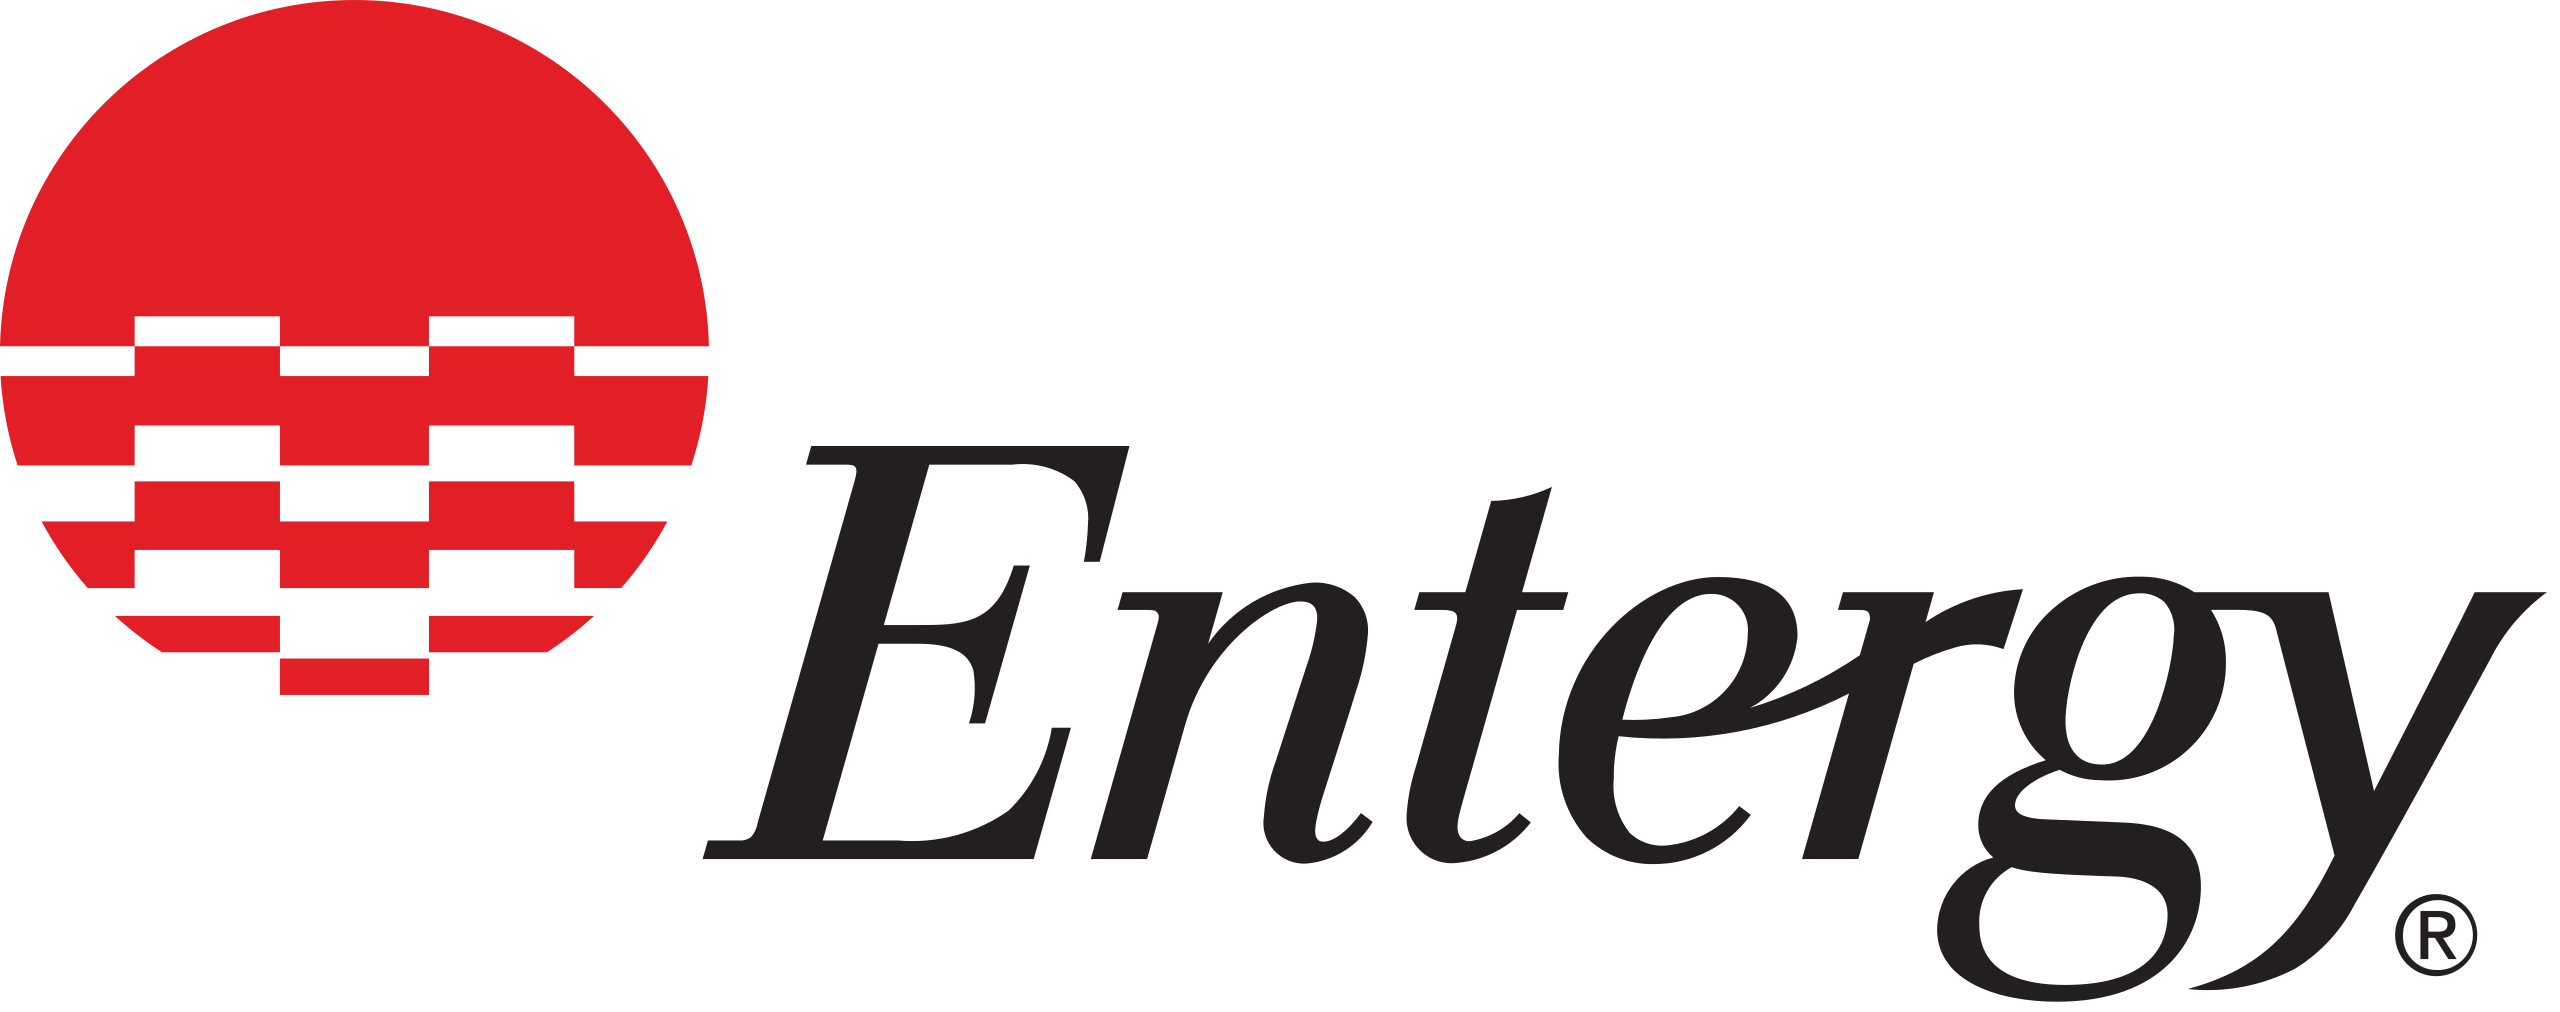 2560px-Entergy logo.svg